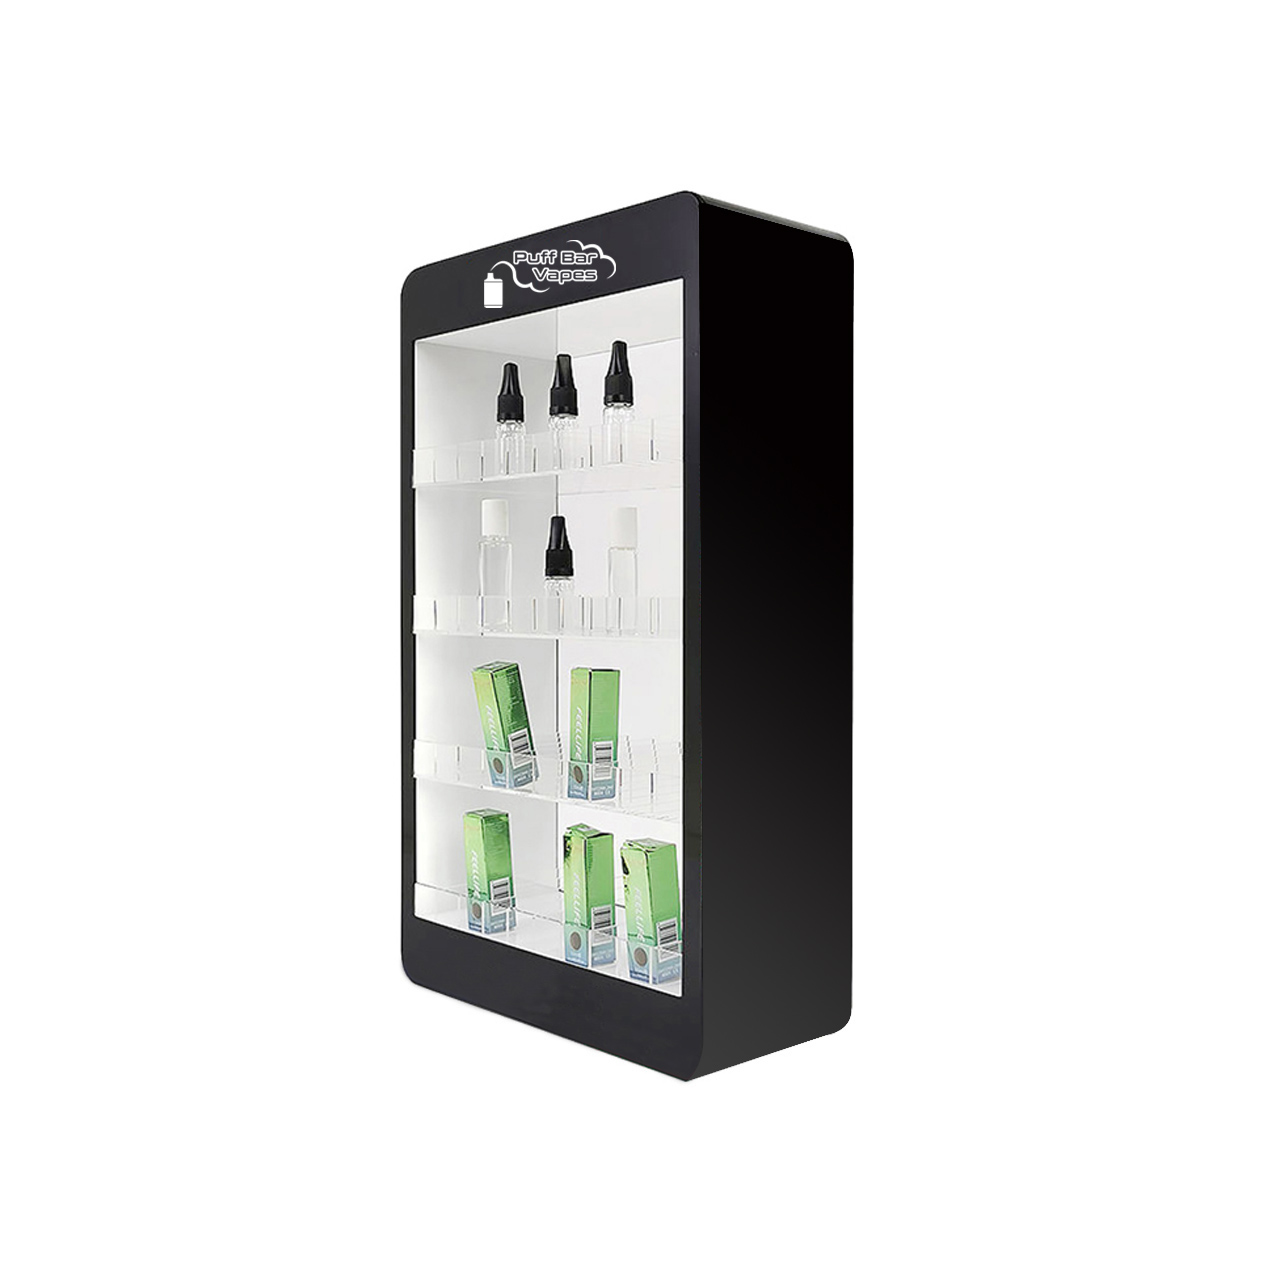 Vape Shop Display Cases, LED E-Juice/E-Cigarette Display stand